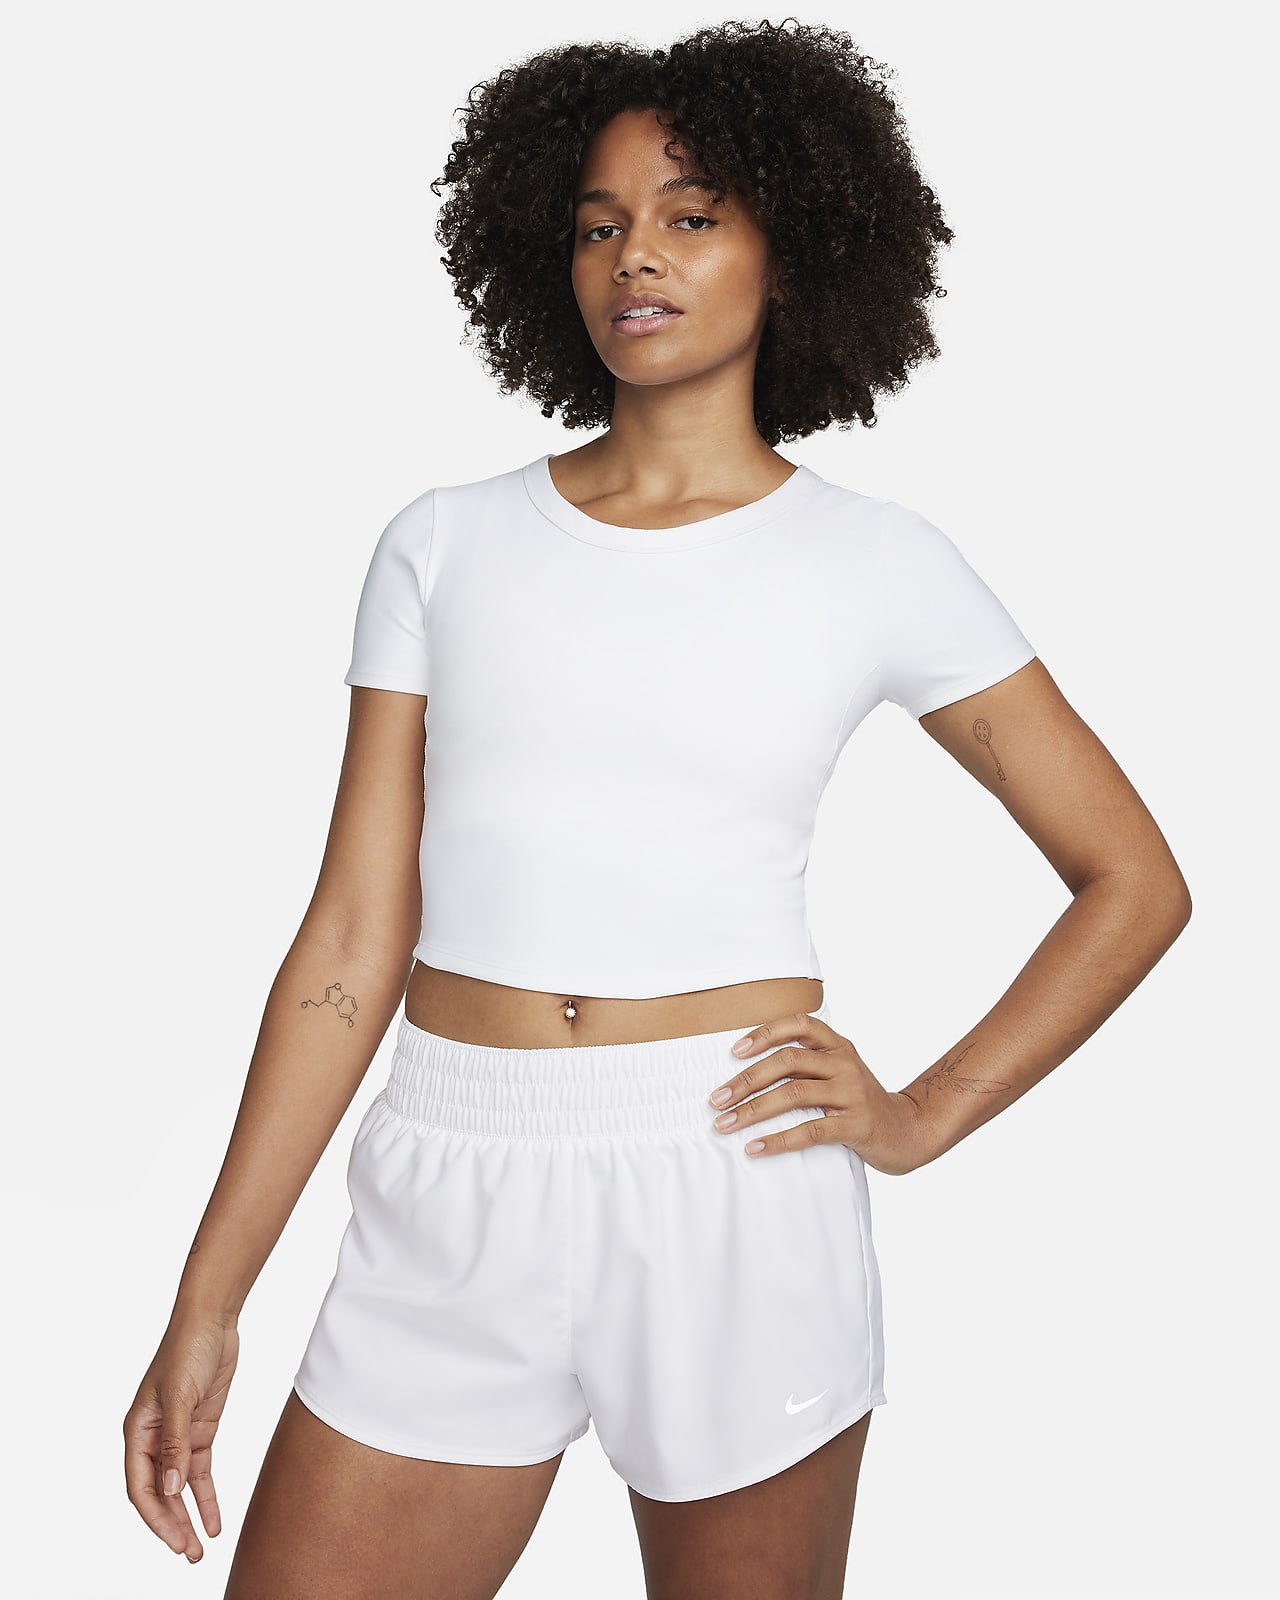 Women's White Shorts. Nike CA